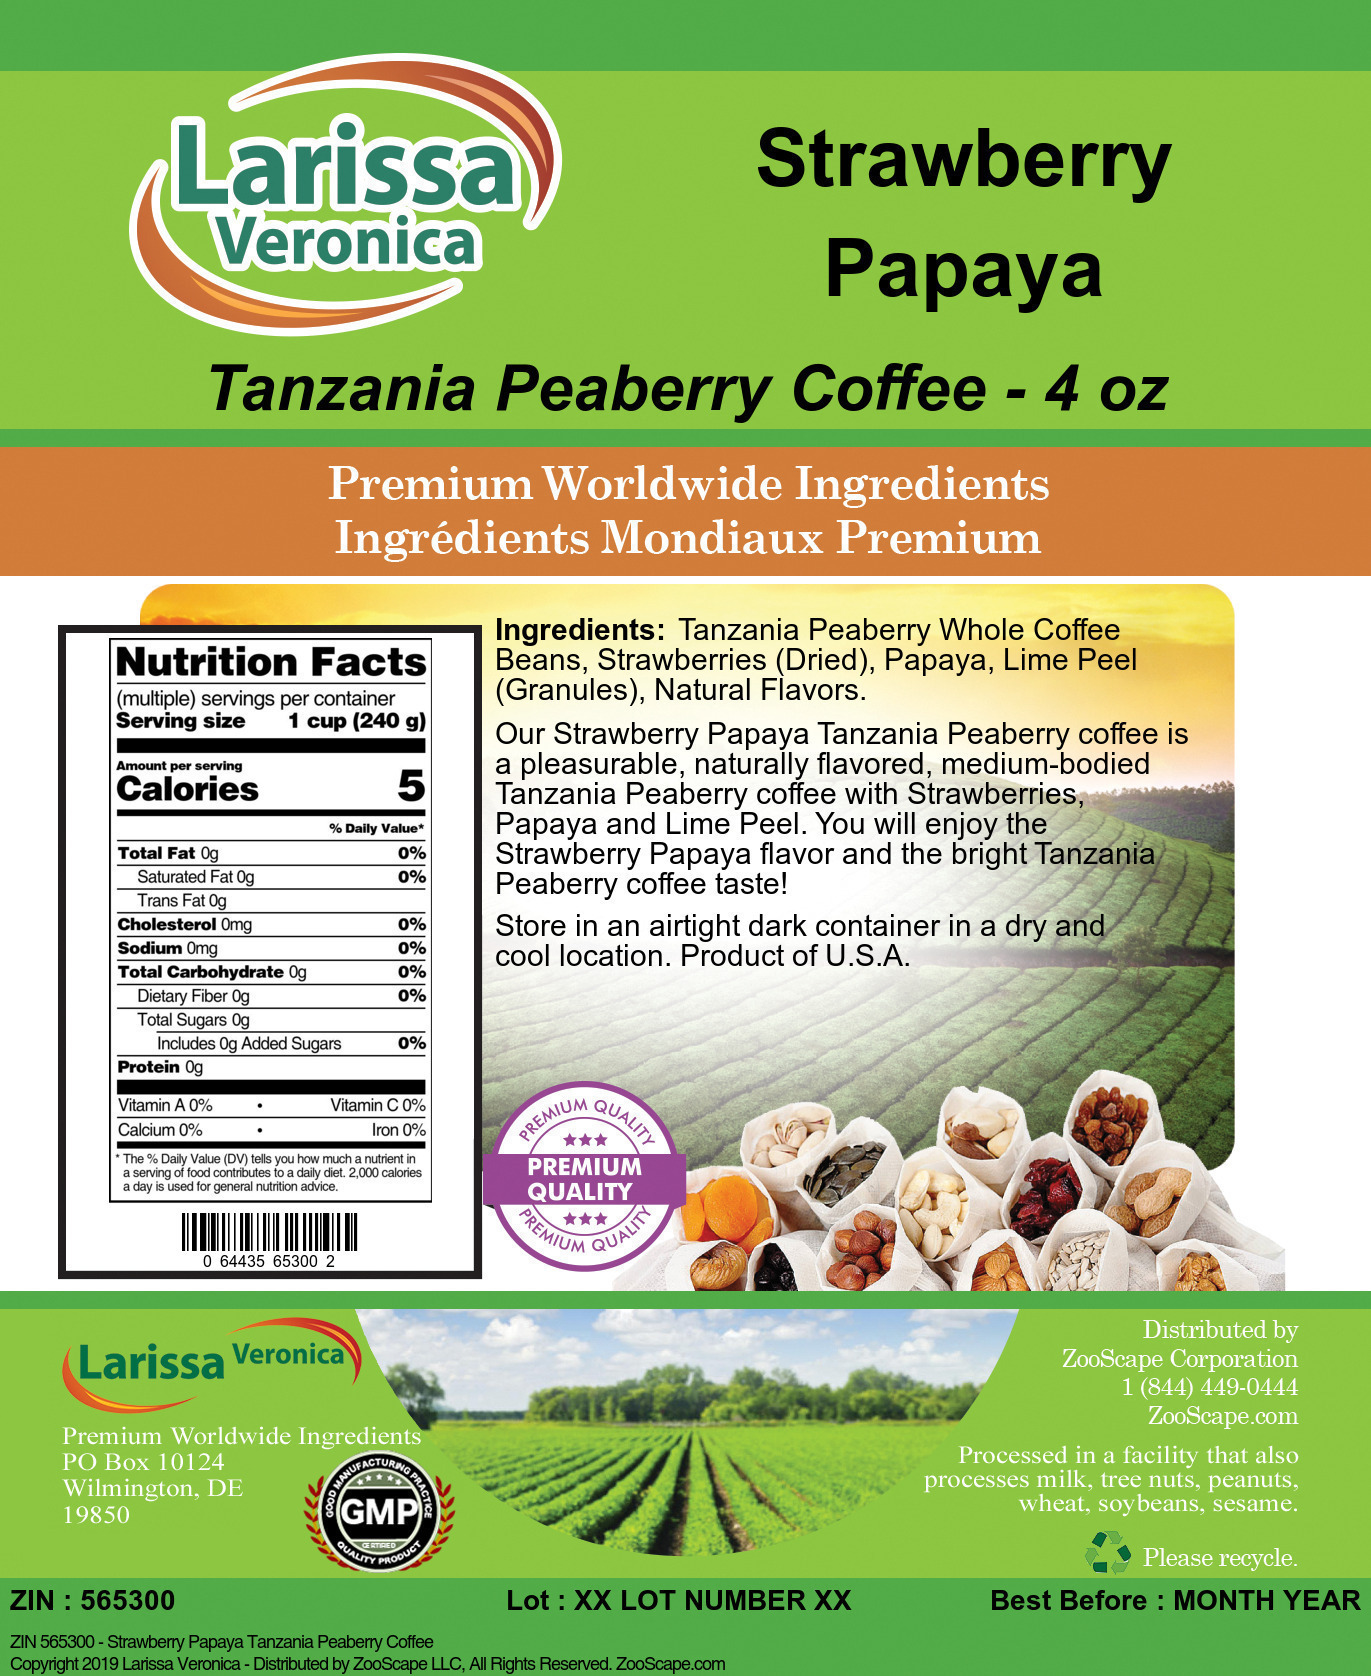 Strawberry Papaya Tanzania Peaberry Coffee - Label